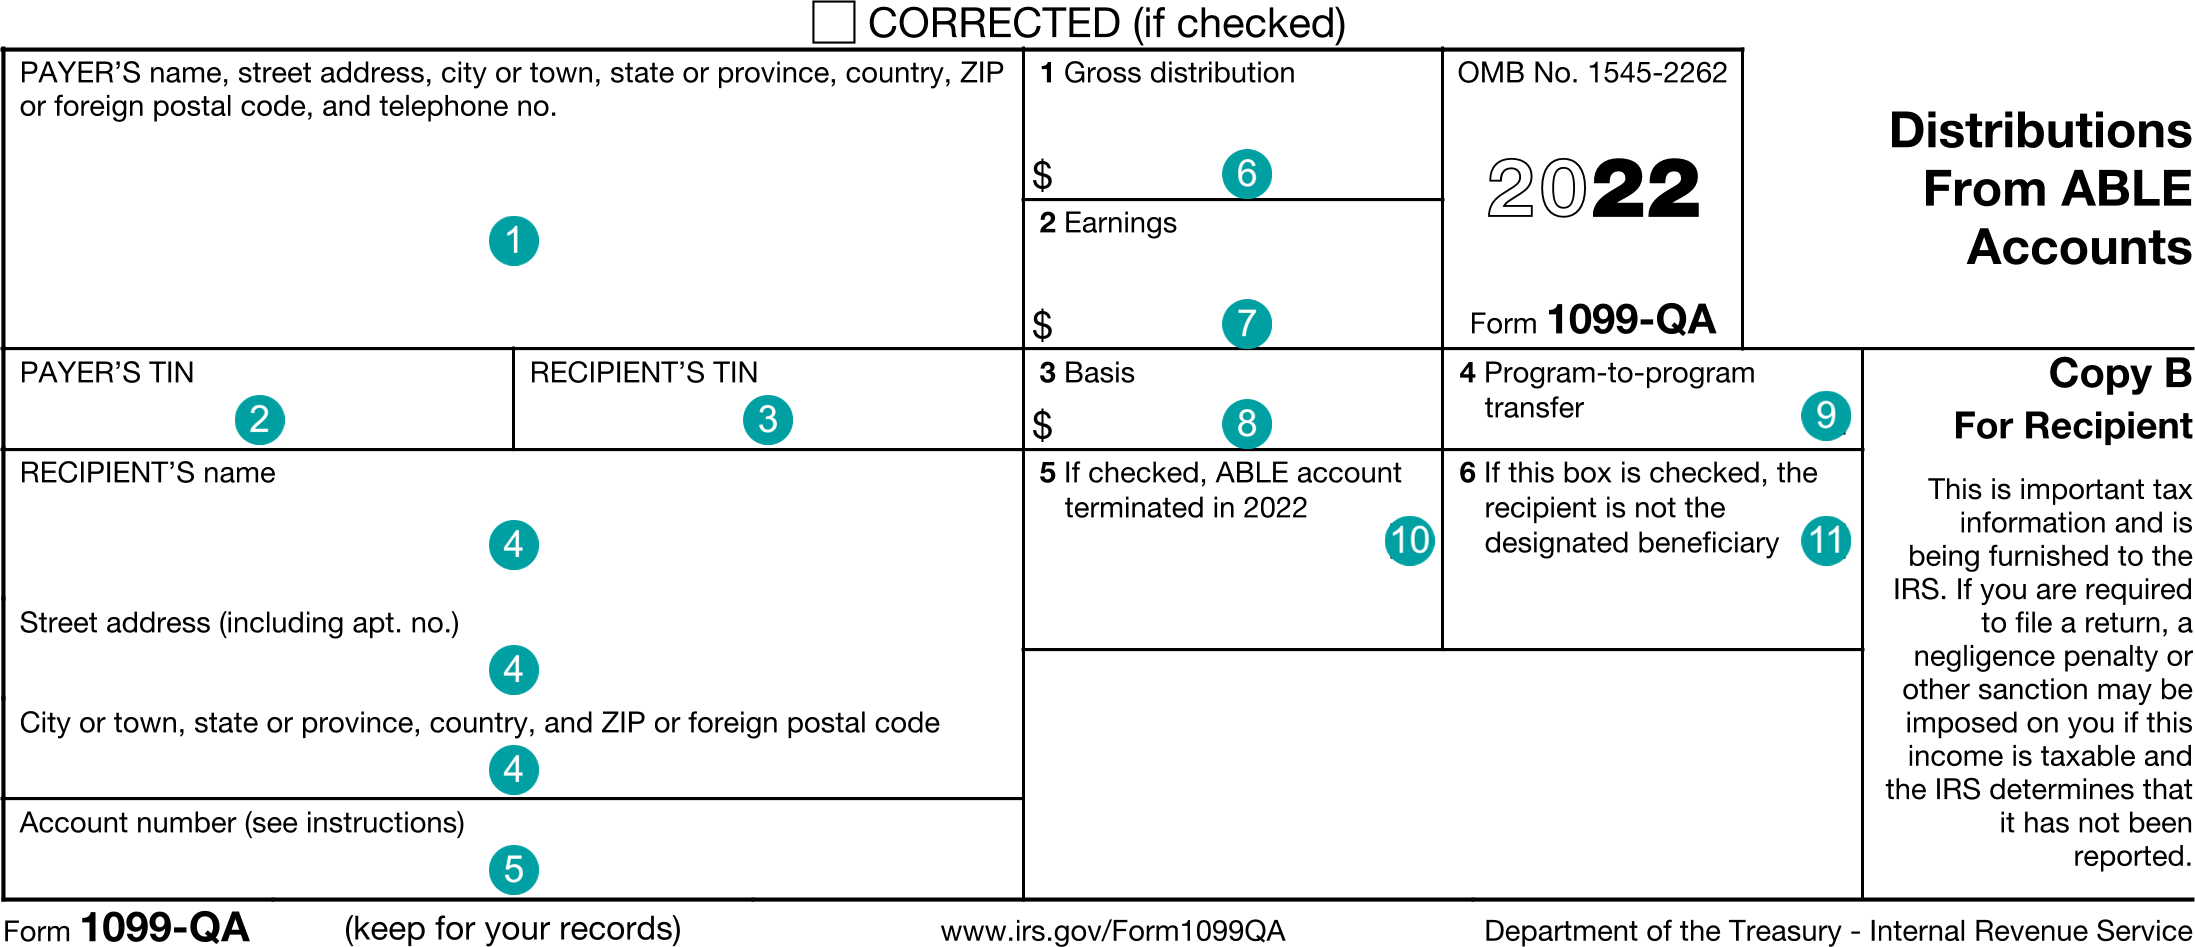 /img/forms/Tax1099Qa/2022/v5.0/Tax1099Qa.Recipient.Form.annotated.fdx.png